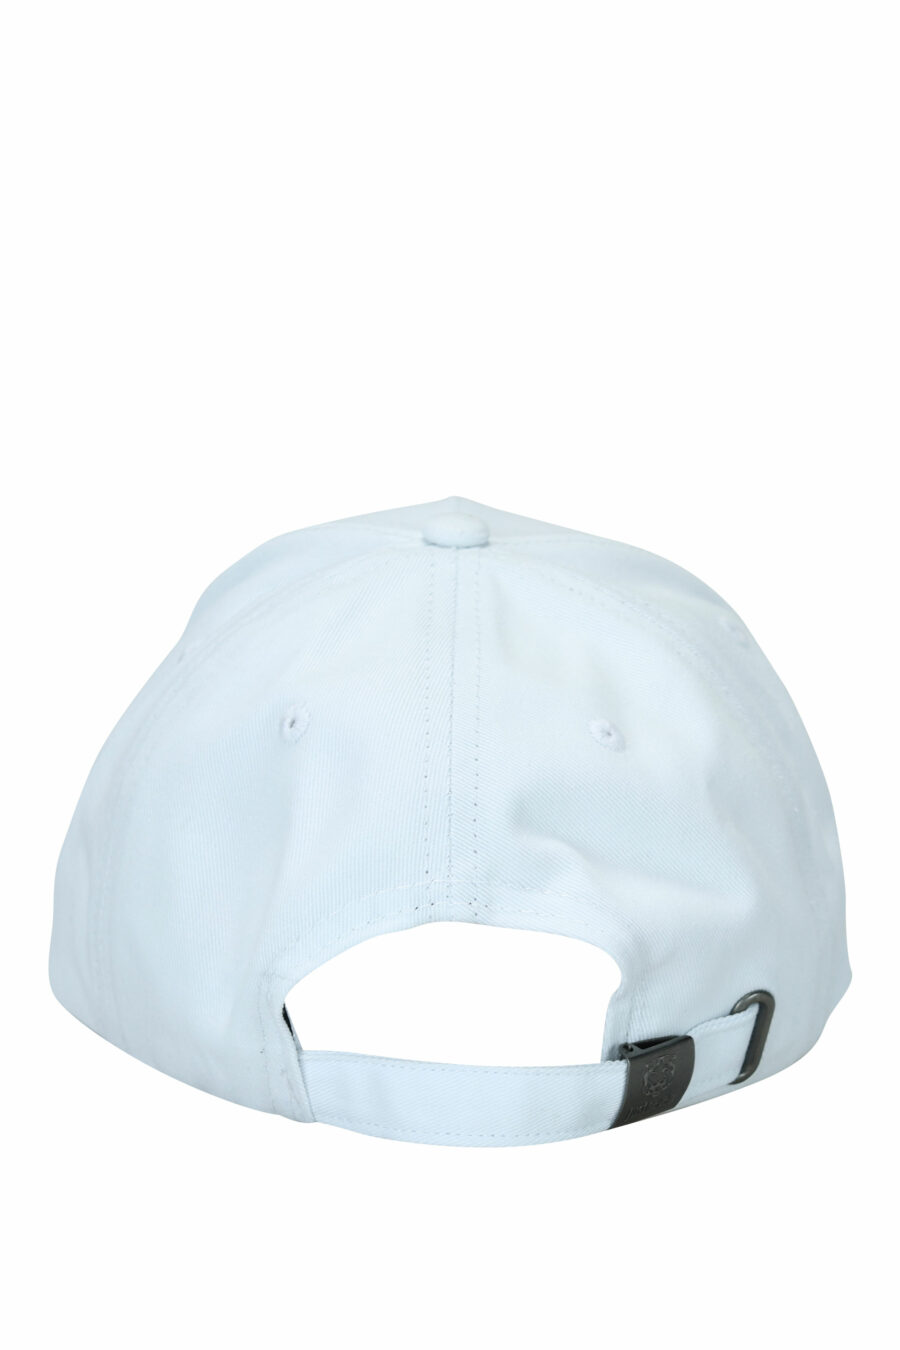 Weiße Kappe mit silbernem Tiger-Logo - 8052672742308 1